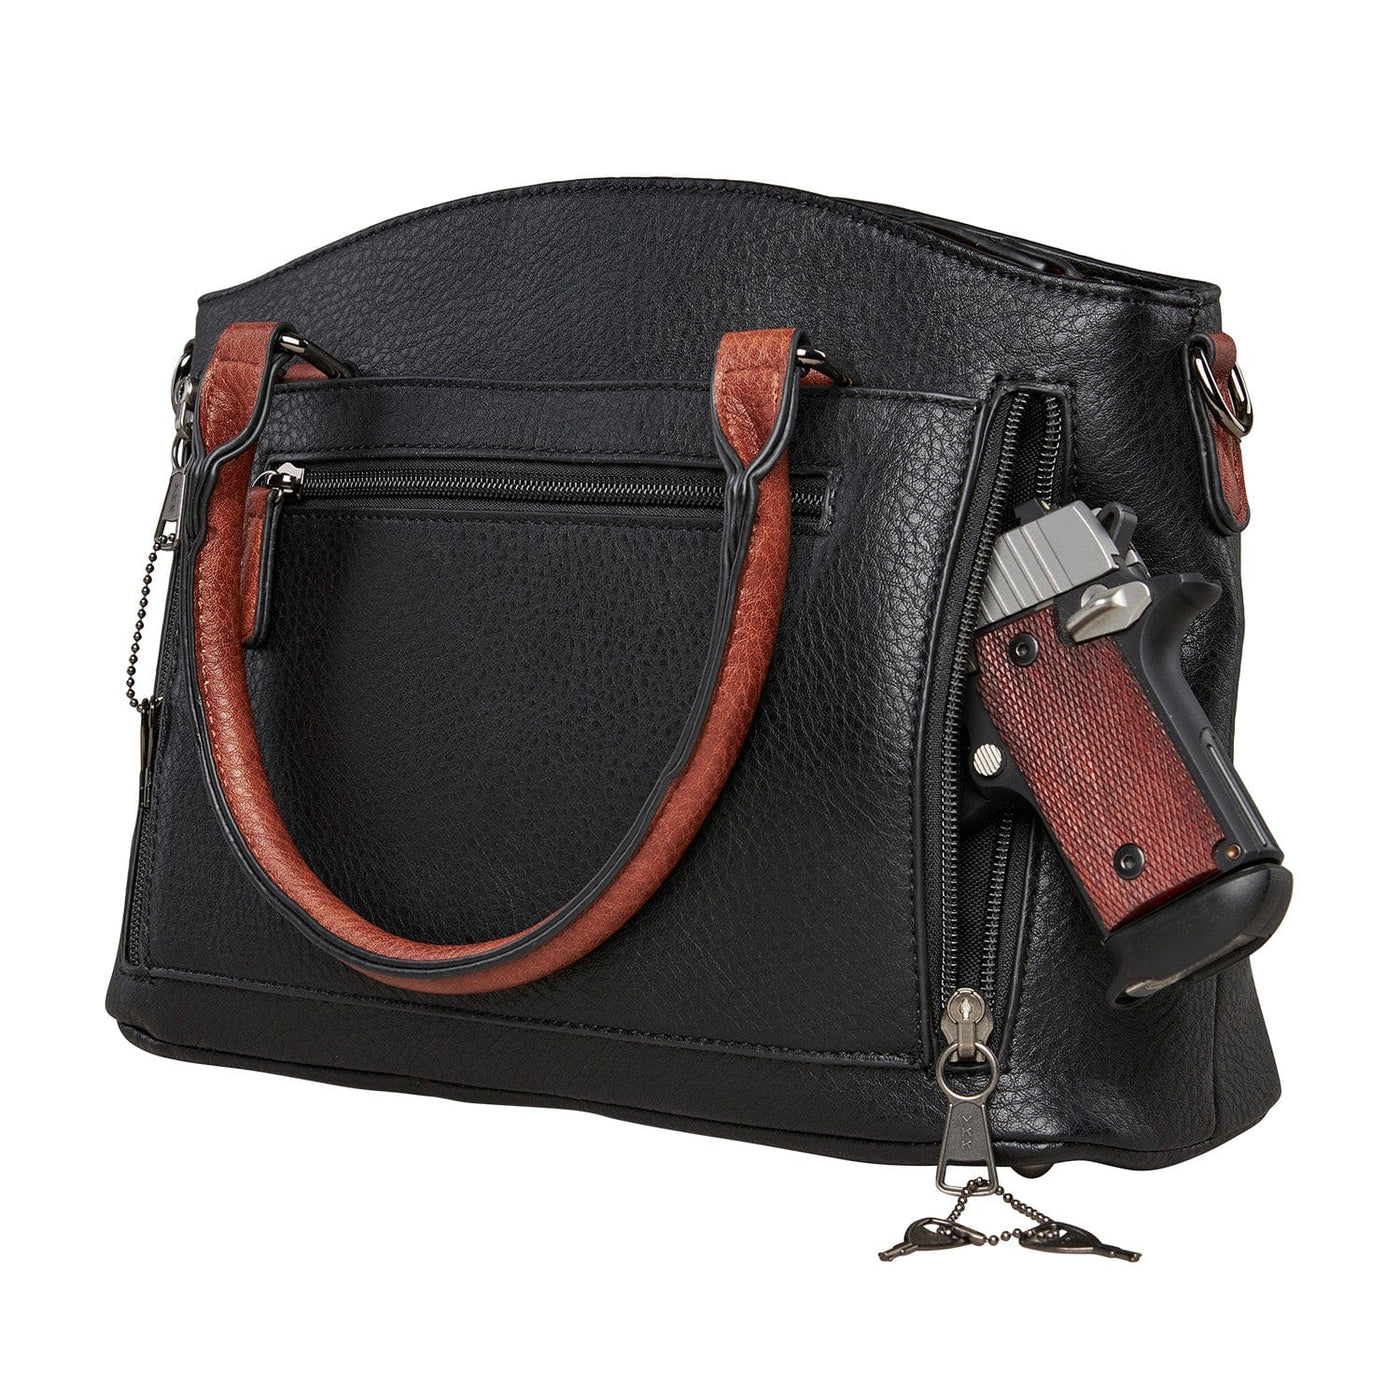 Carly - Concealed Carry Satchel - Gun Handbags